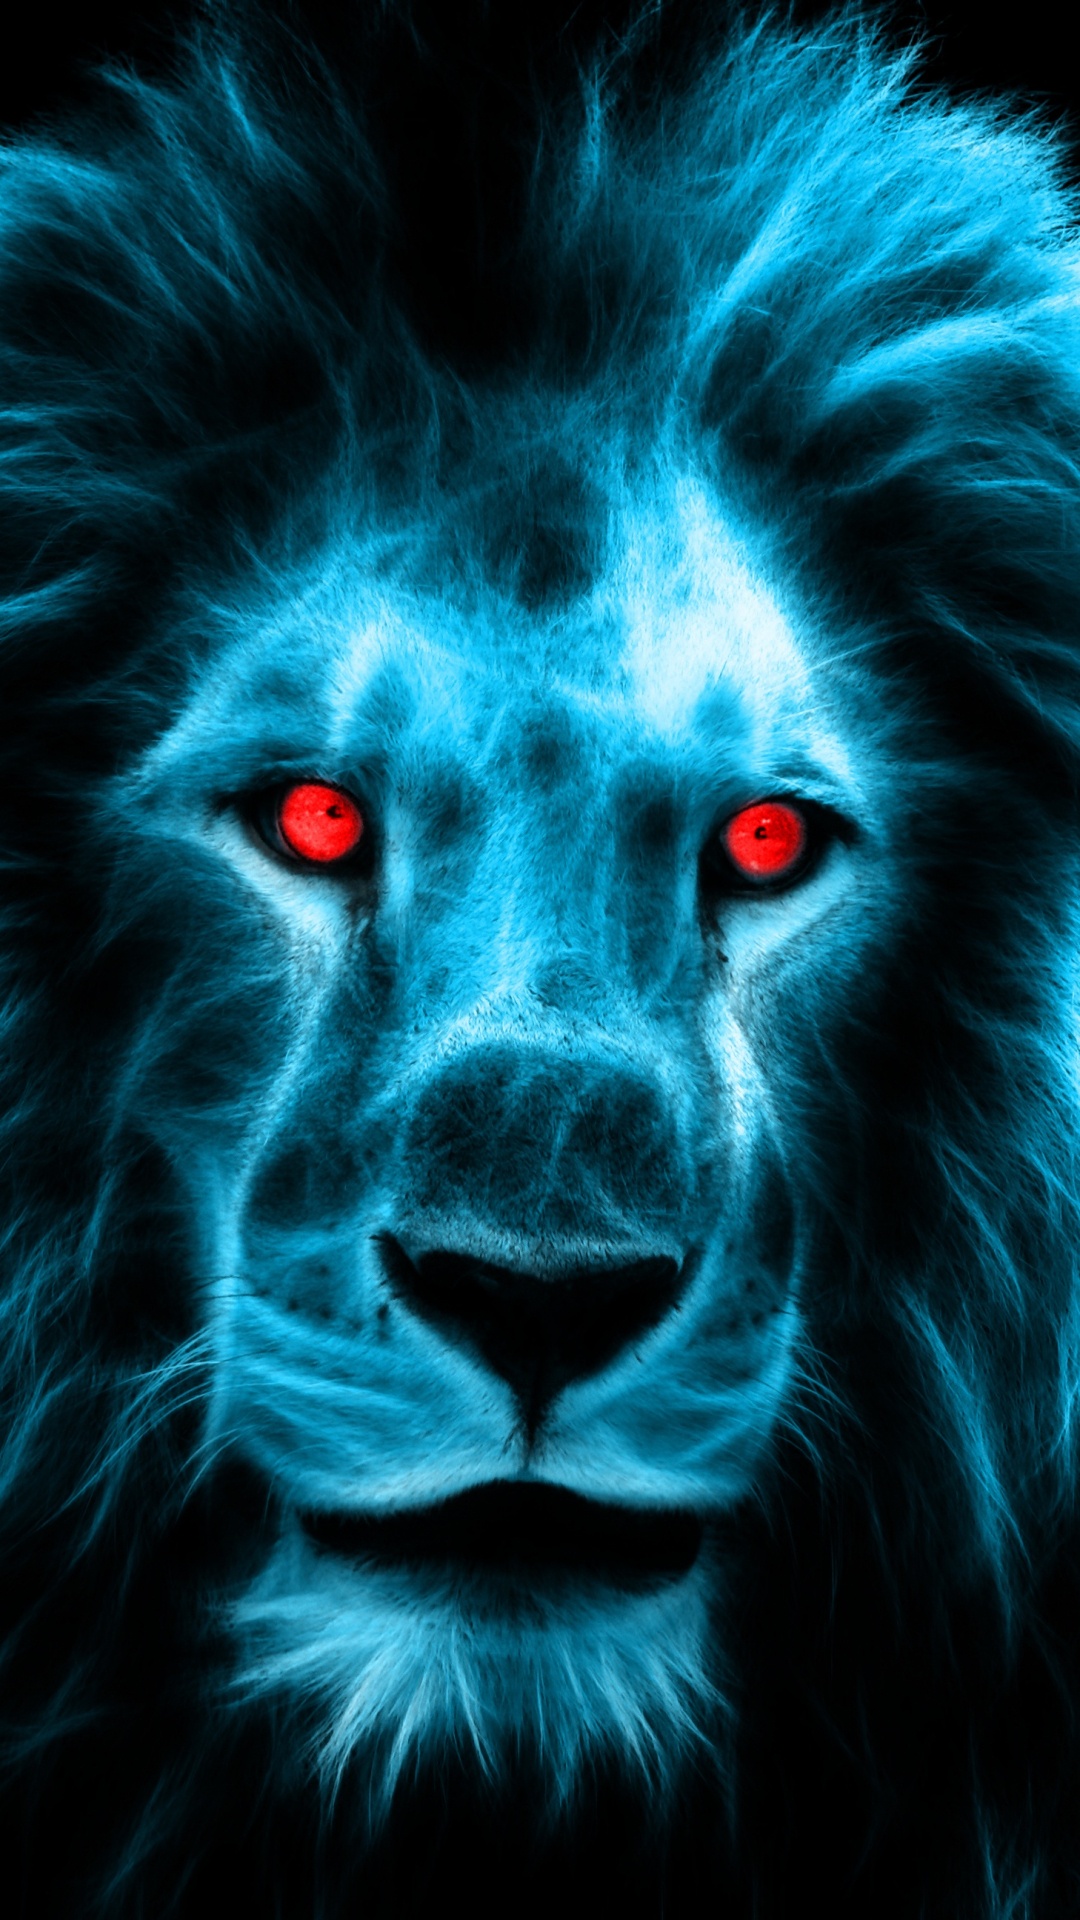 Lion Aux Yeux Bleus Illustration. Wallpaper in 1080x1920 Resolution